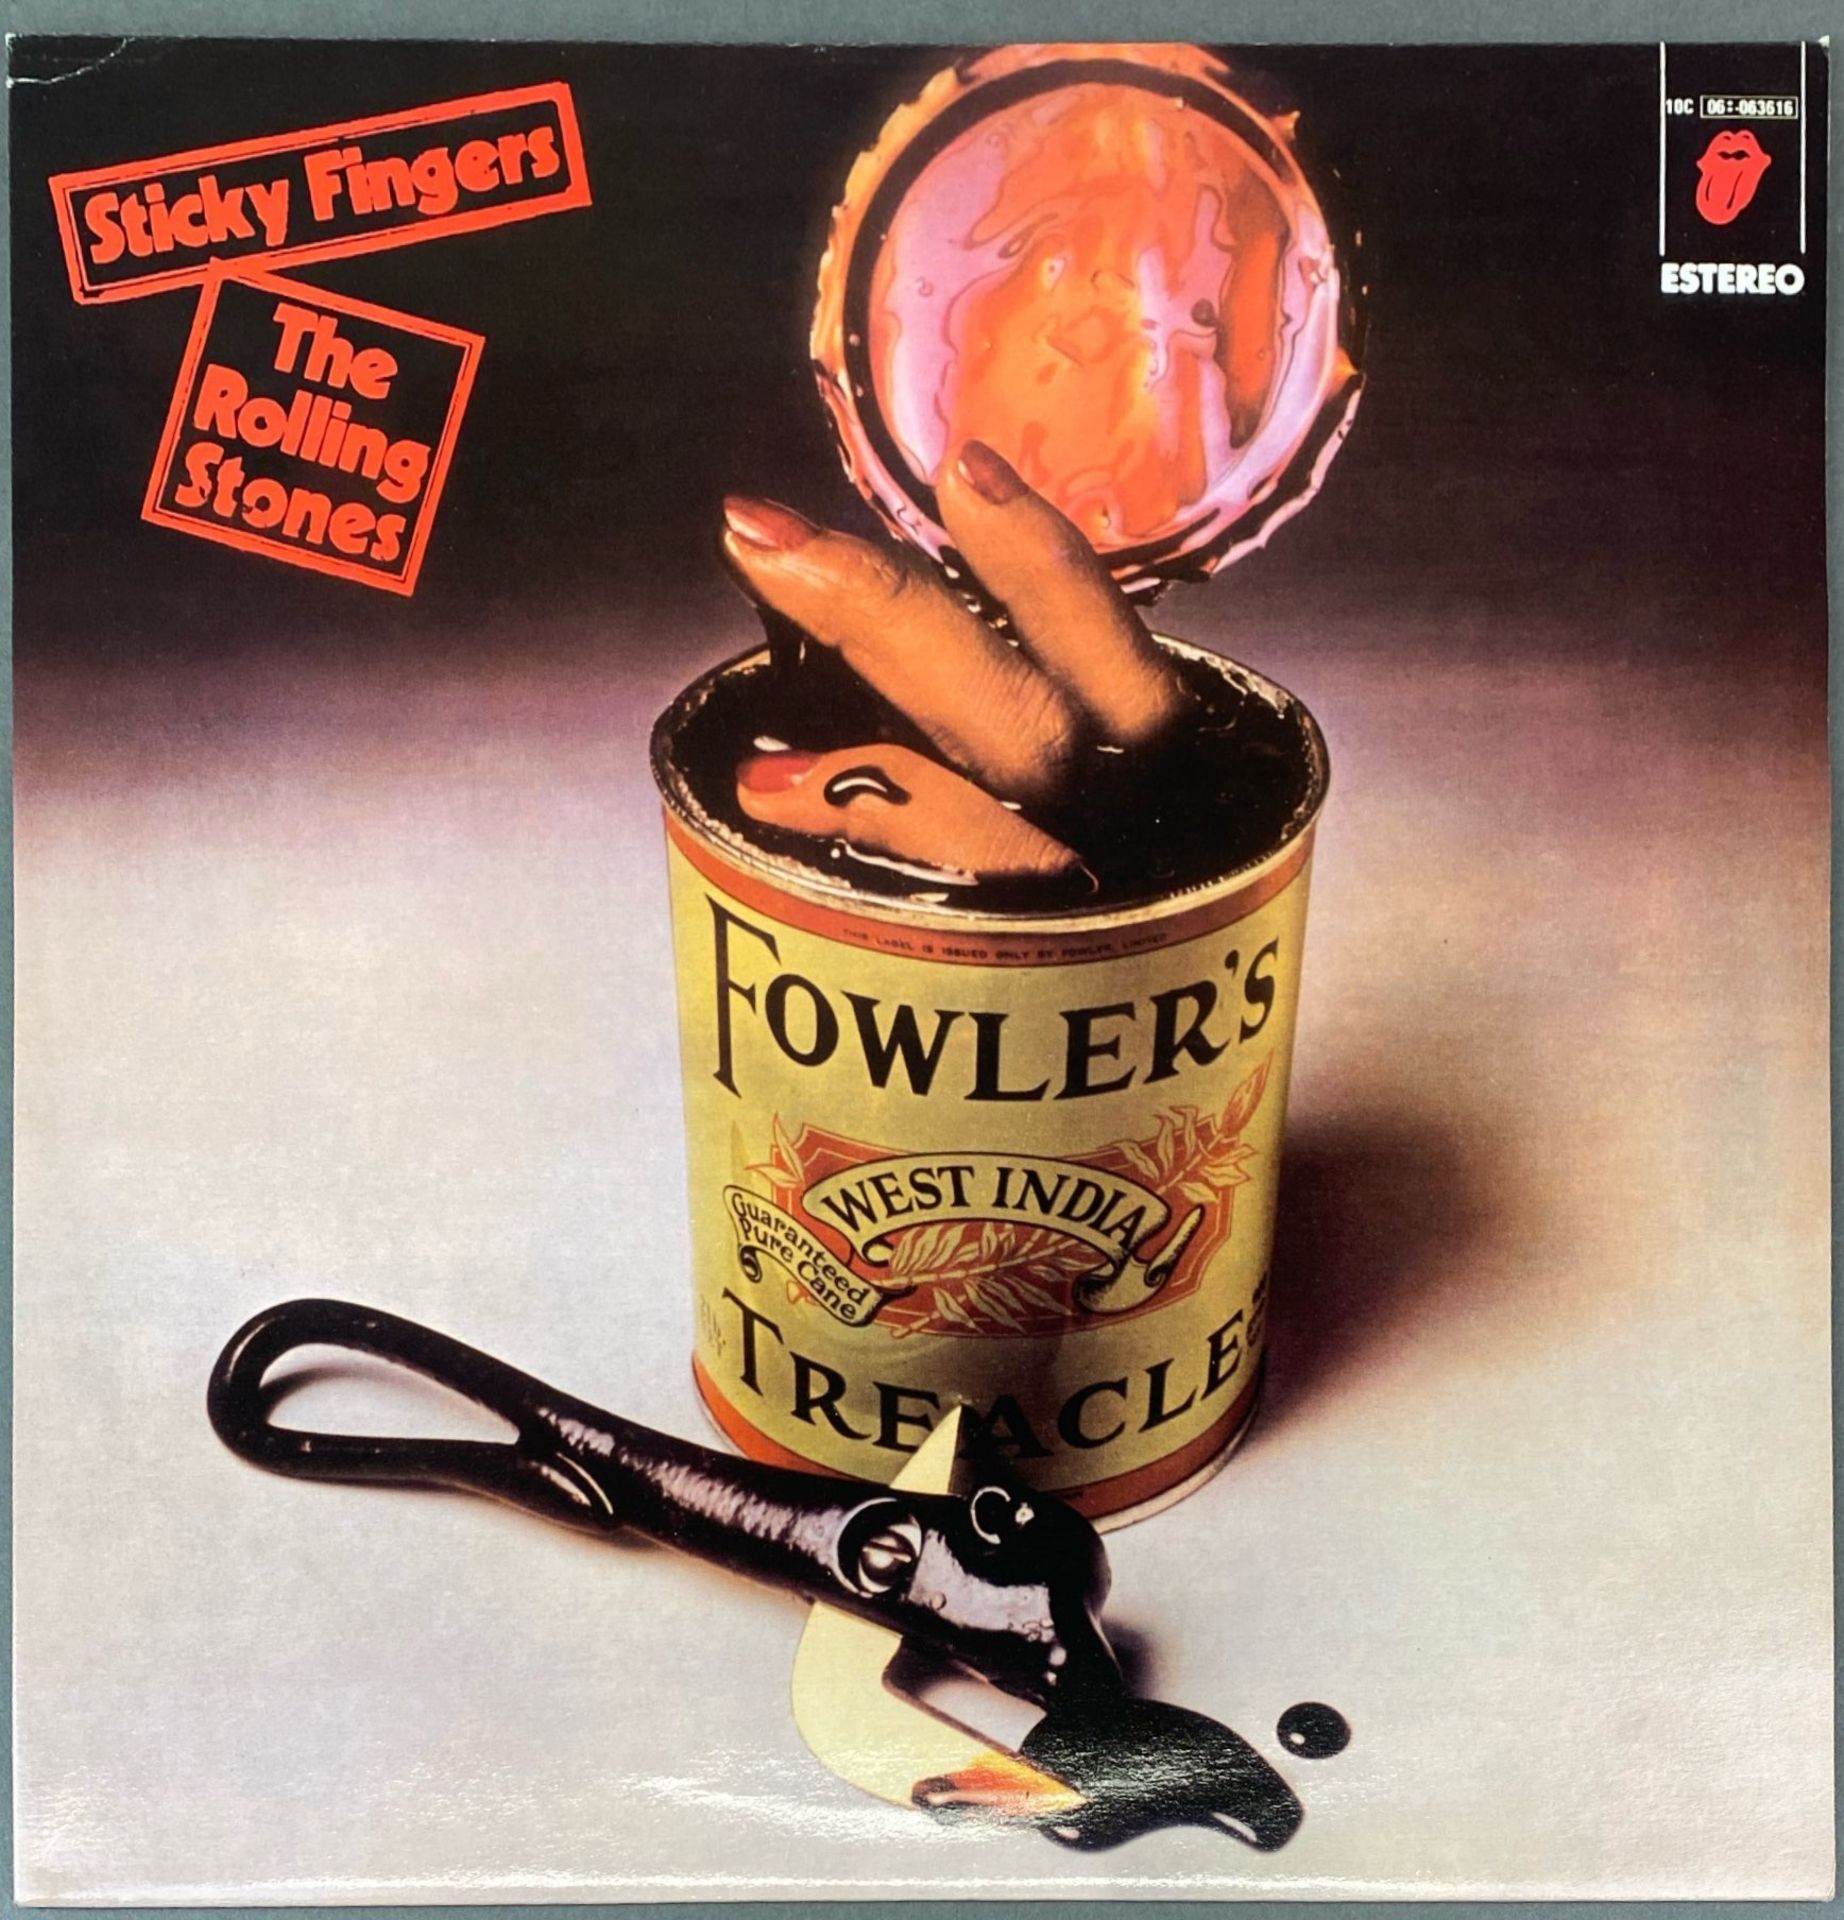 Sticky Fingers, Estereo, 1980 Spanish release 10C(06:063616) purple vinyl.